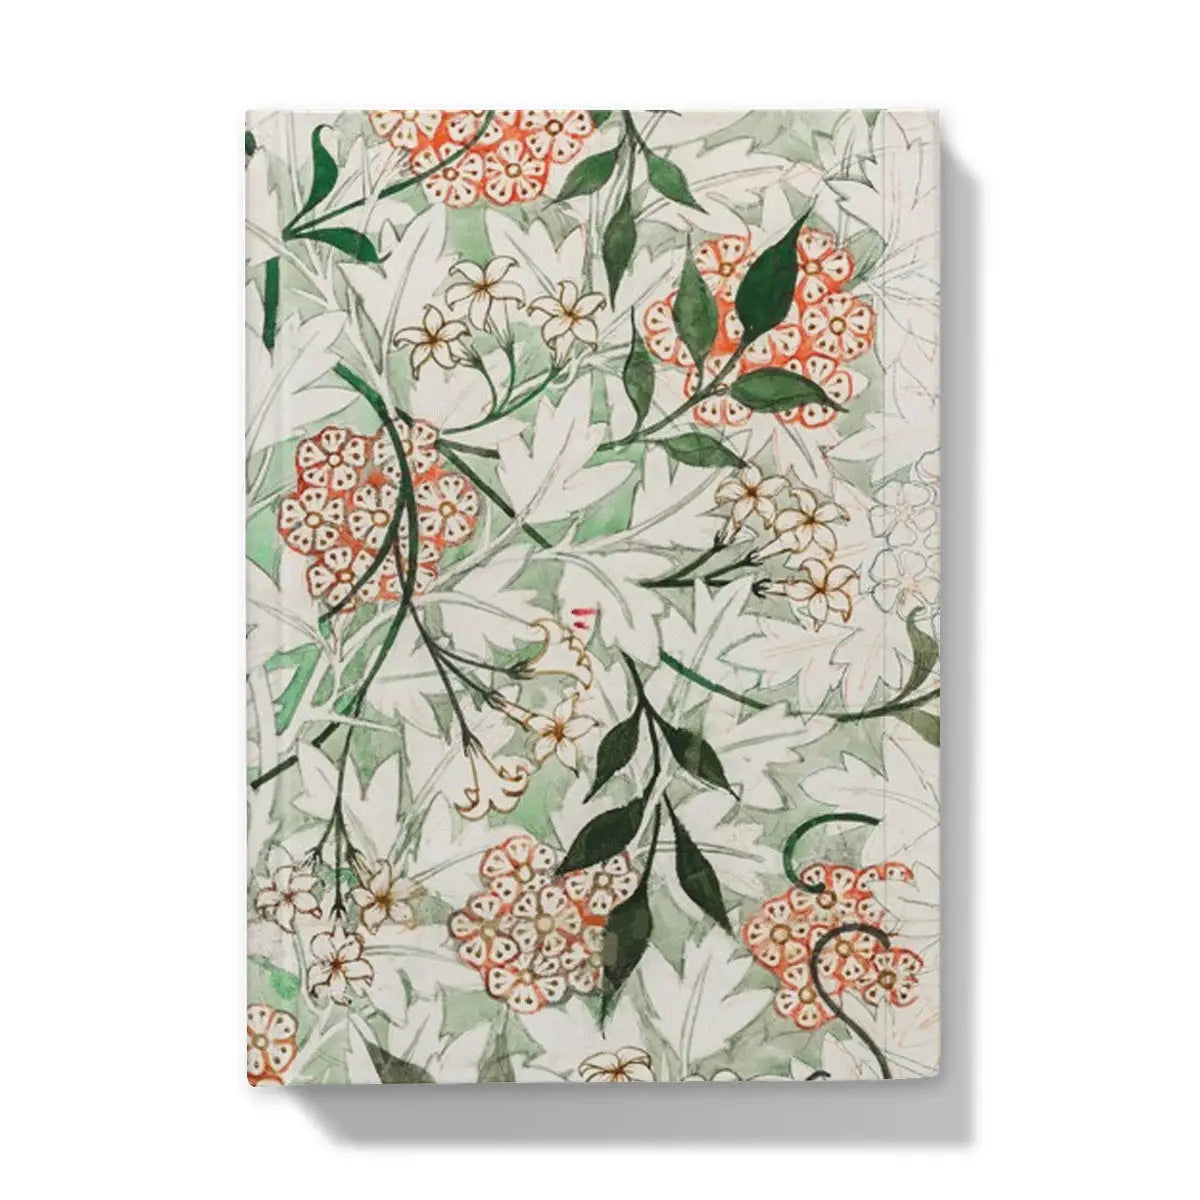 Jasmine - William Morris British Floral Textile Art Journal - 5’x7’ / 5’ x 7’ - Lined Paper - Notebooks &